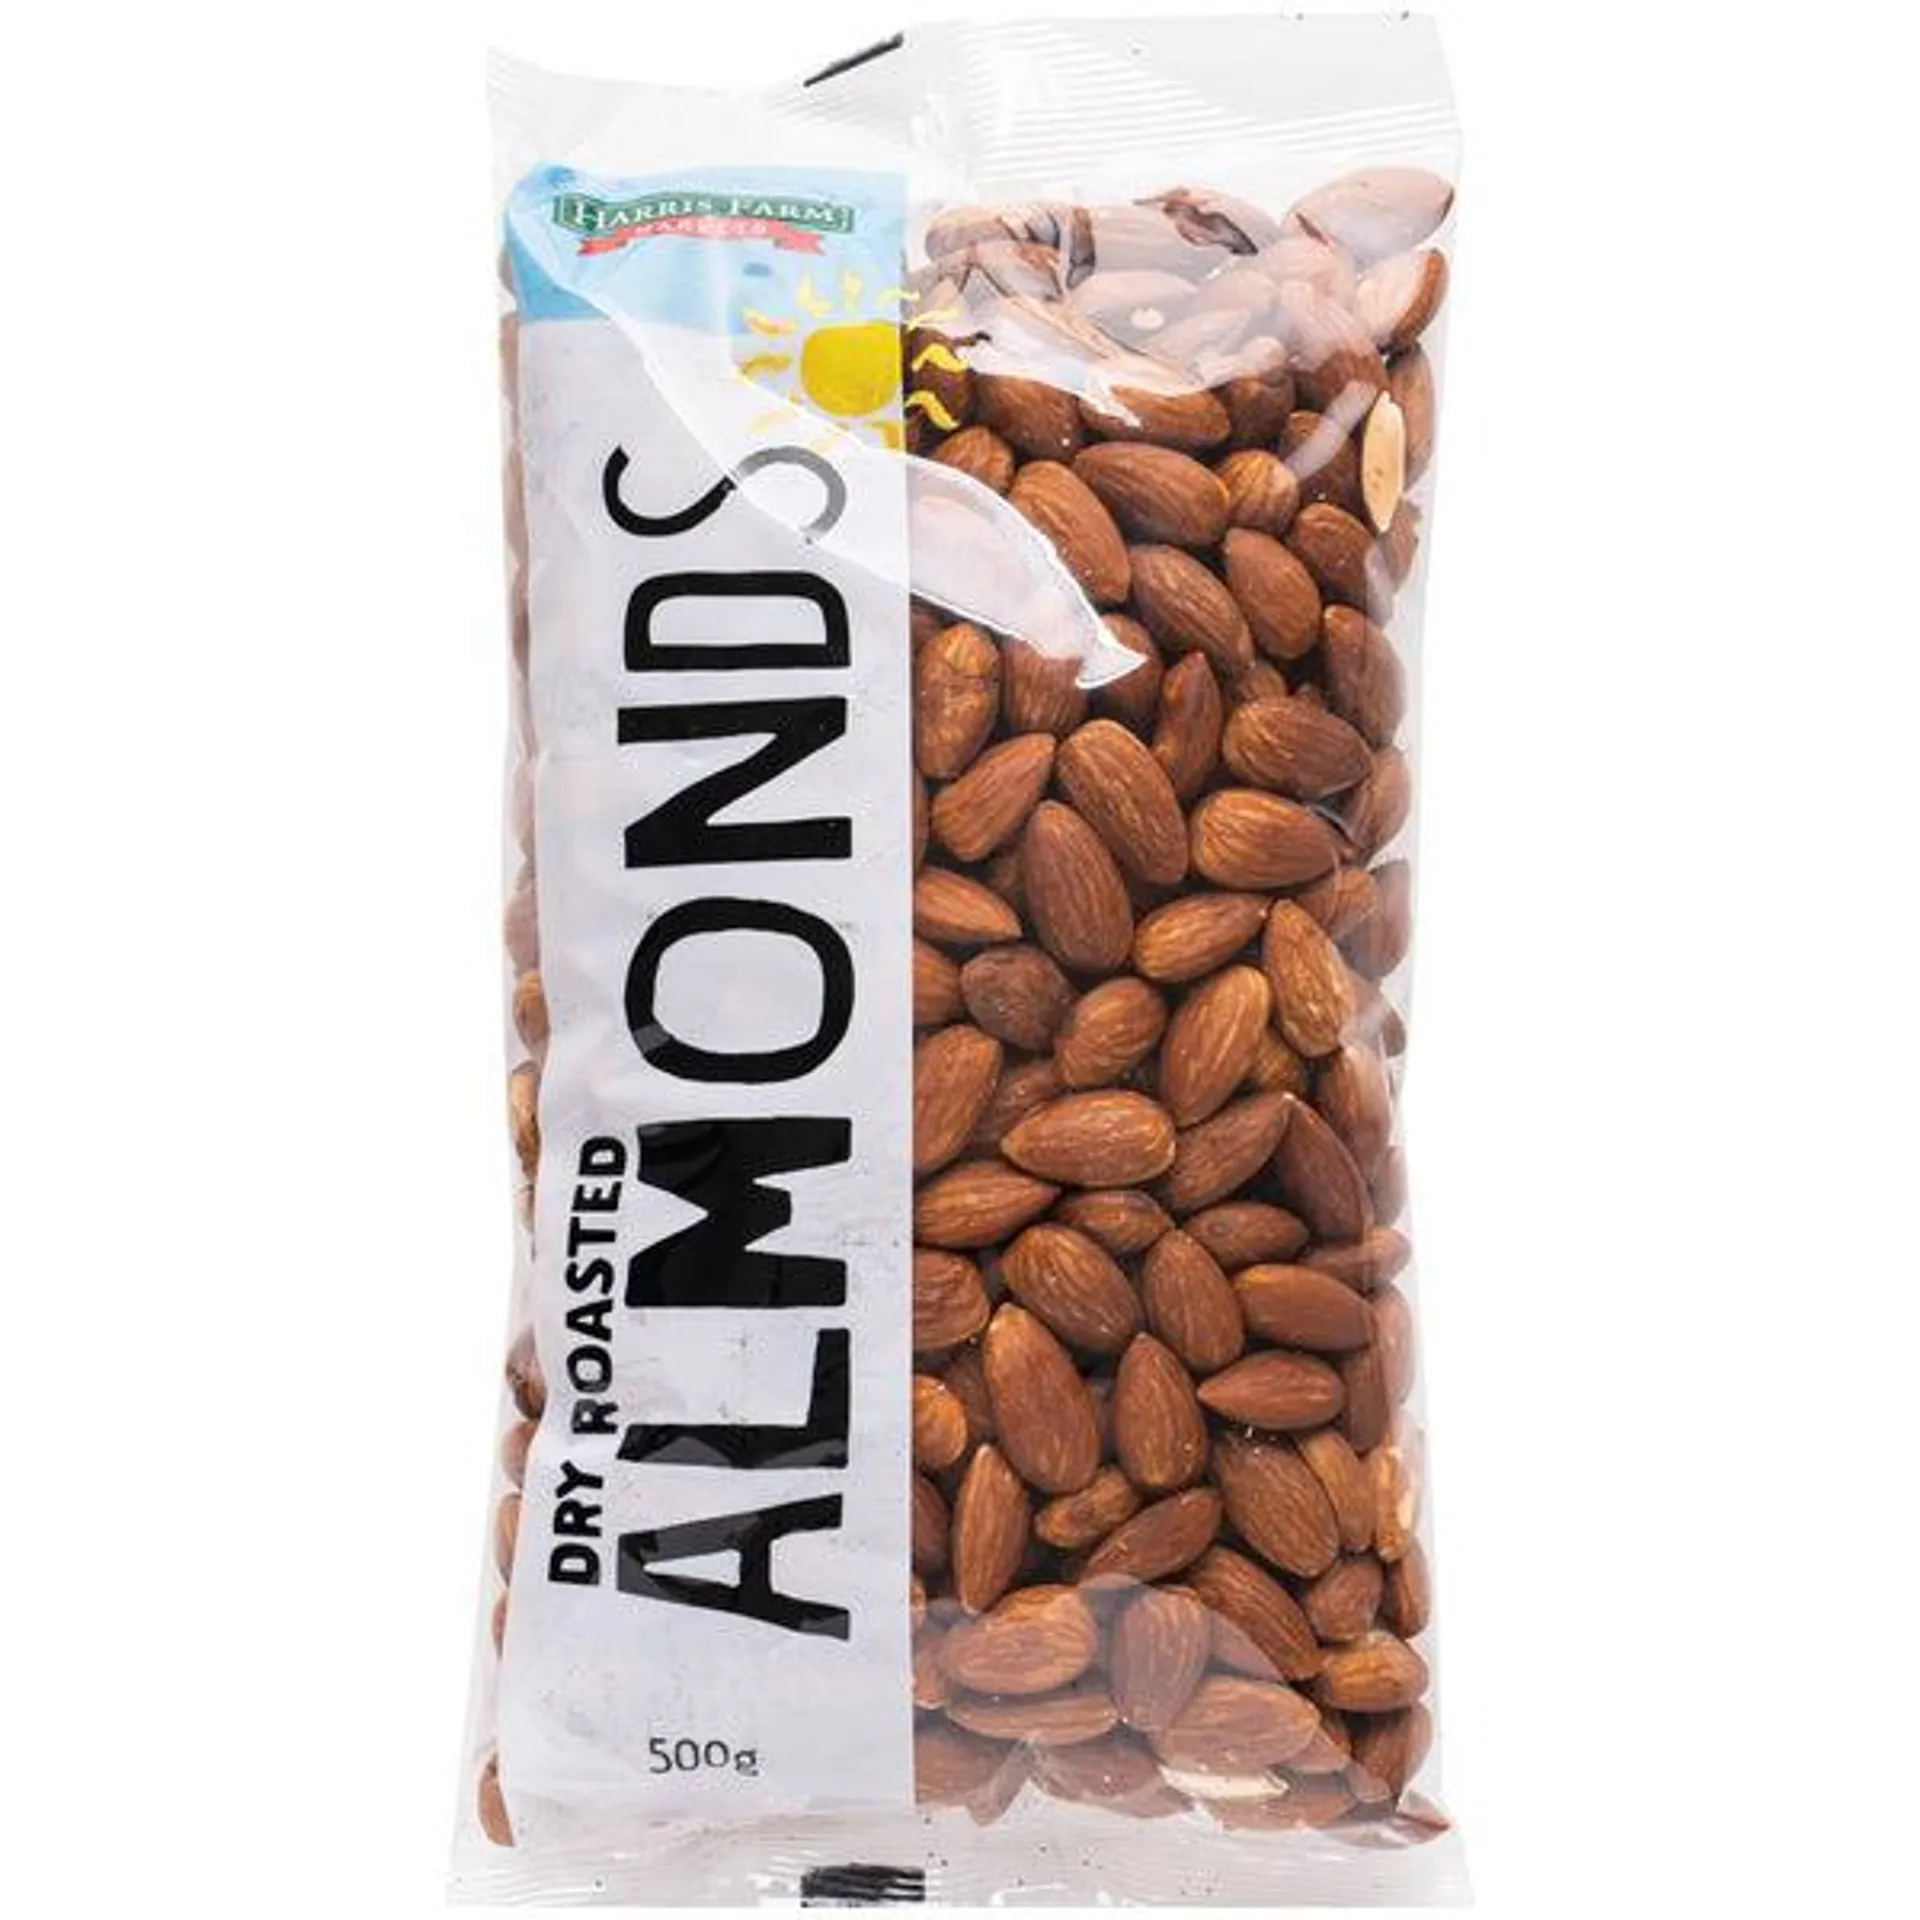 Harris Farm Almonds Dry Roasted 500g